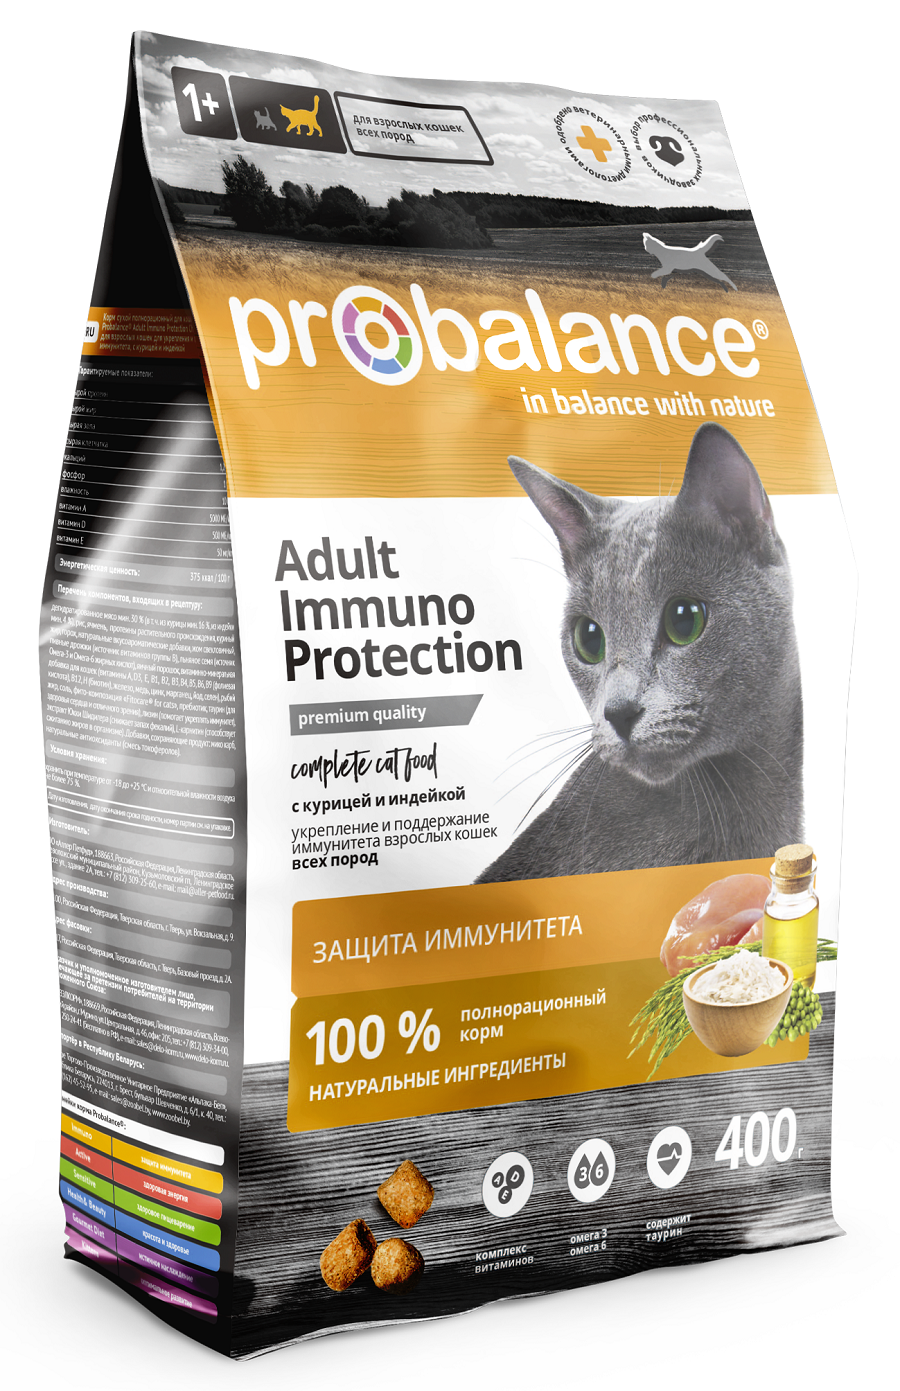 Сухой корм для кошек ProBalance Immuno Protection, защита иммунитета,  птица, 400 г - отзывы покупателей на маркетплейсе Мегамаркет | Артикул  товара:100023203055